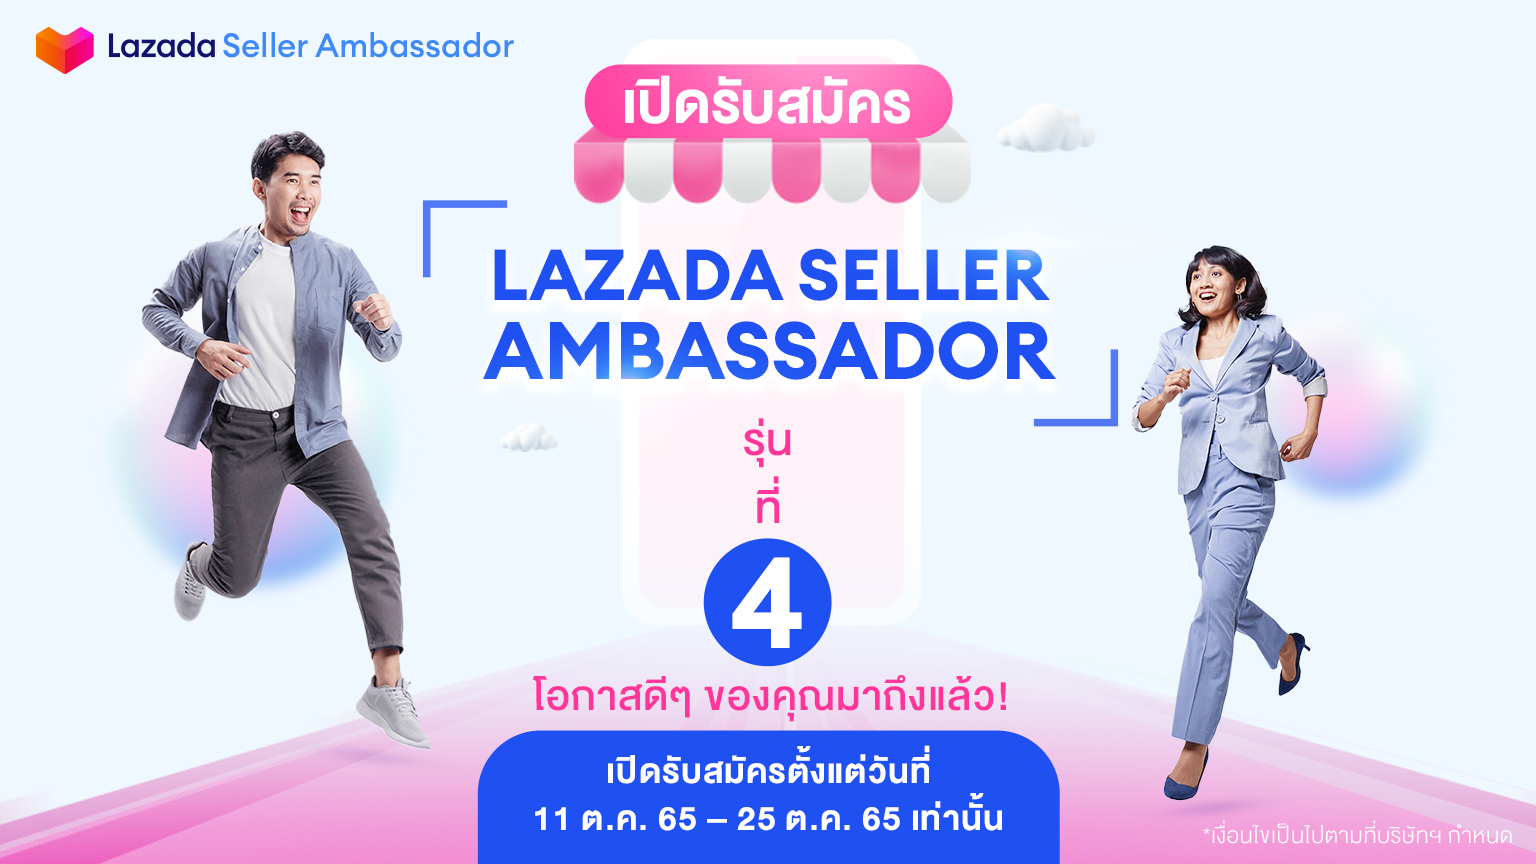 Lazada Seller Ambassador Happy Selling Blog เทคนิคขายของออนไลน์ เทรนด์การตลาด เรื่องราวความสำเร็จ เทคนิคขายดี การตลาด ขายของในลาซาด้า ผู้ขายลาซาด้า อัปเดต บทความ สินค้าออนไลน์ต่อเดือน